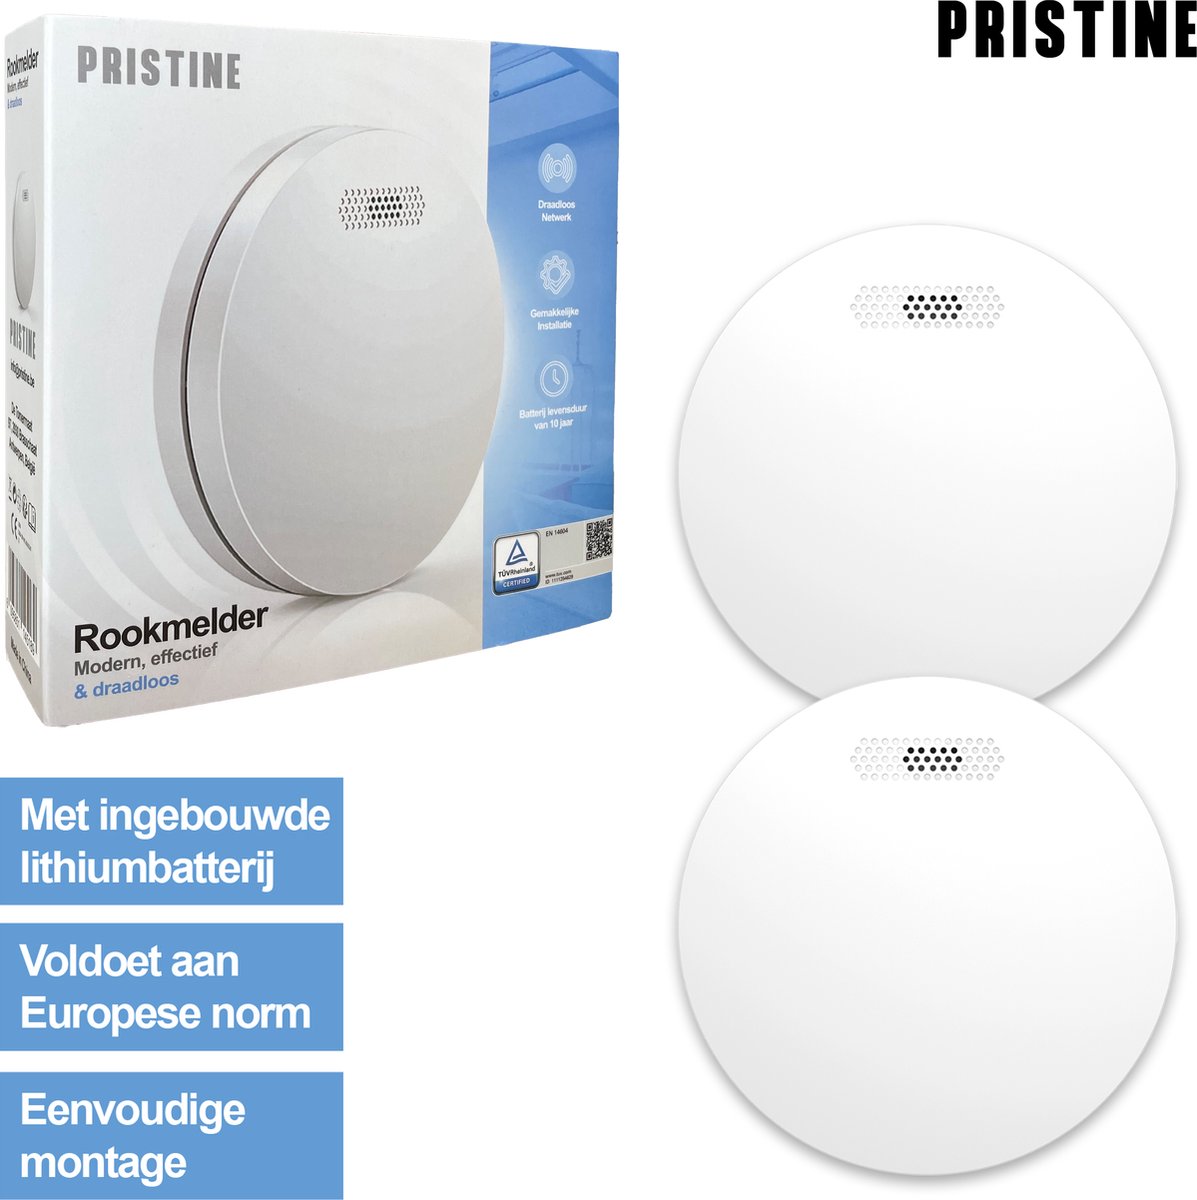 PRISTINE - 2 PACK - Slimme Rookmelders met 10 Jaar Batterij en Magneet Montage - Rookmelder Koppelbaar - WiFi - 10 jaar batterij - Voldoet aan Europese norm EN14604